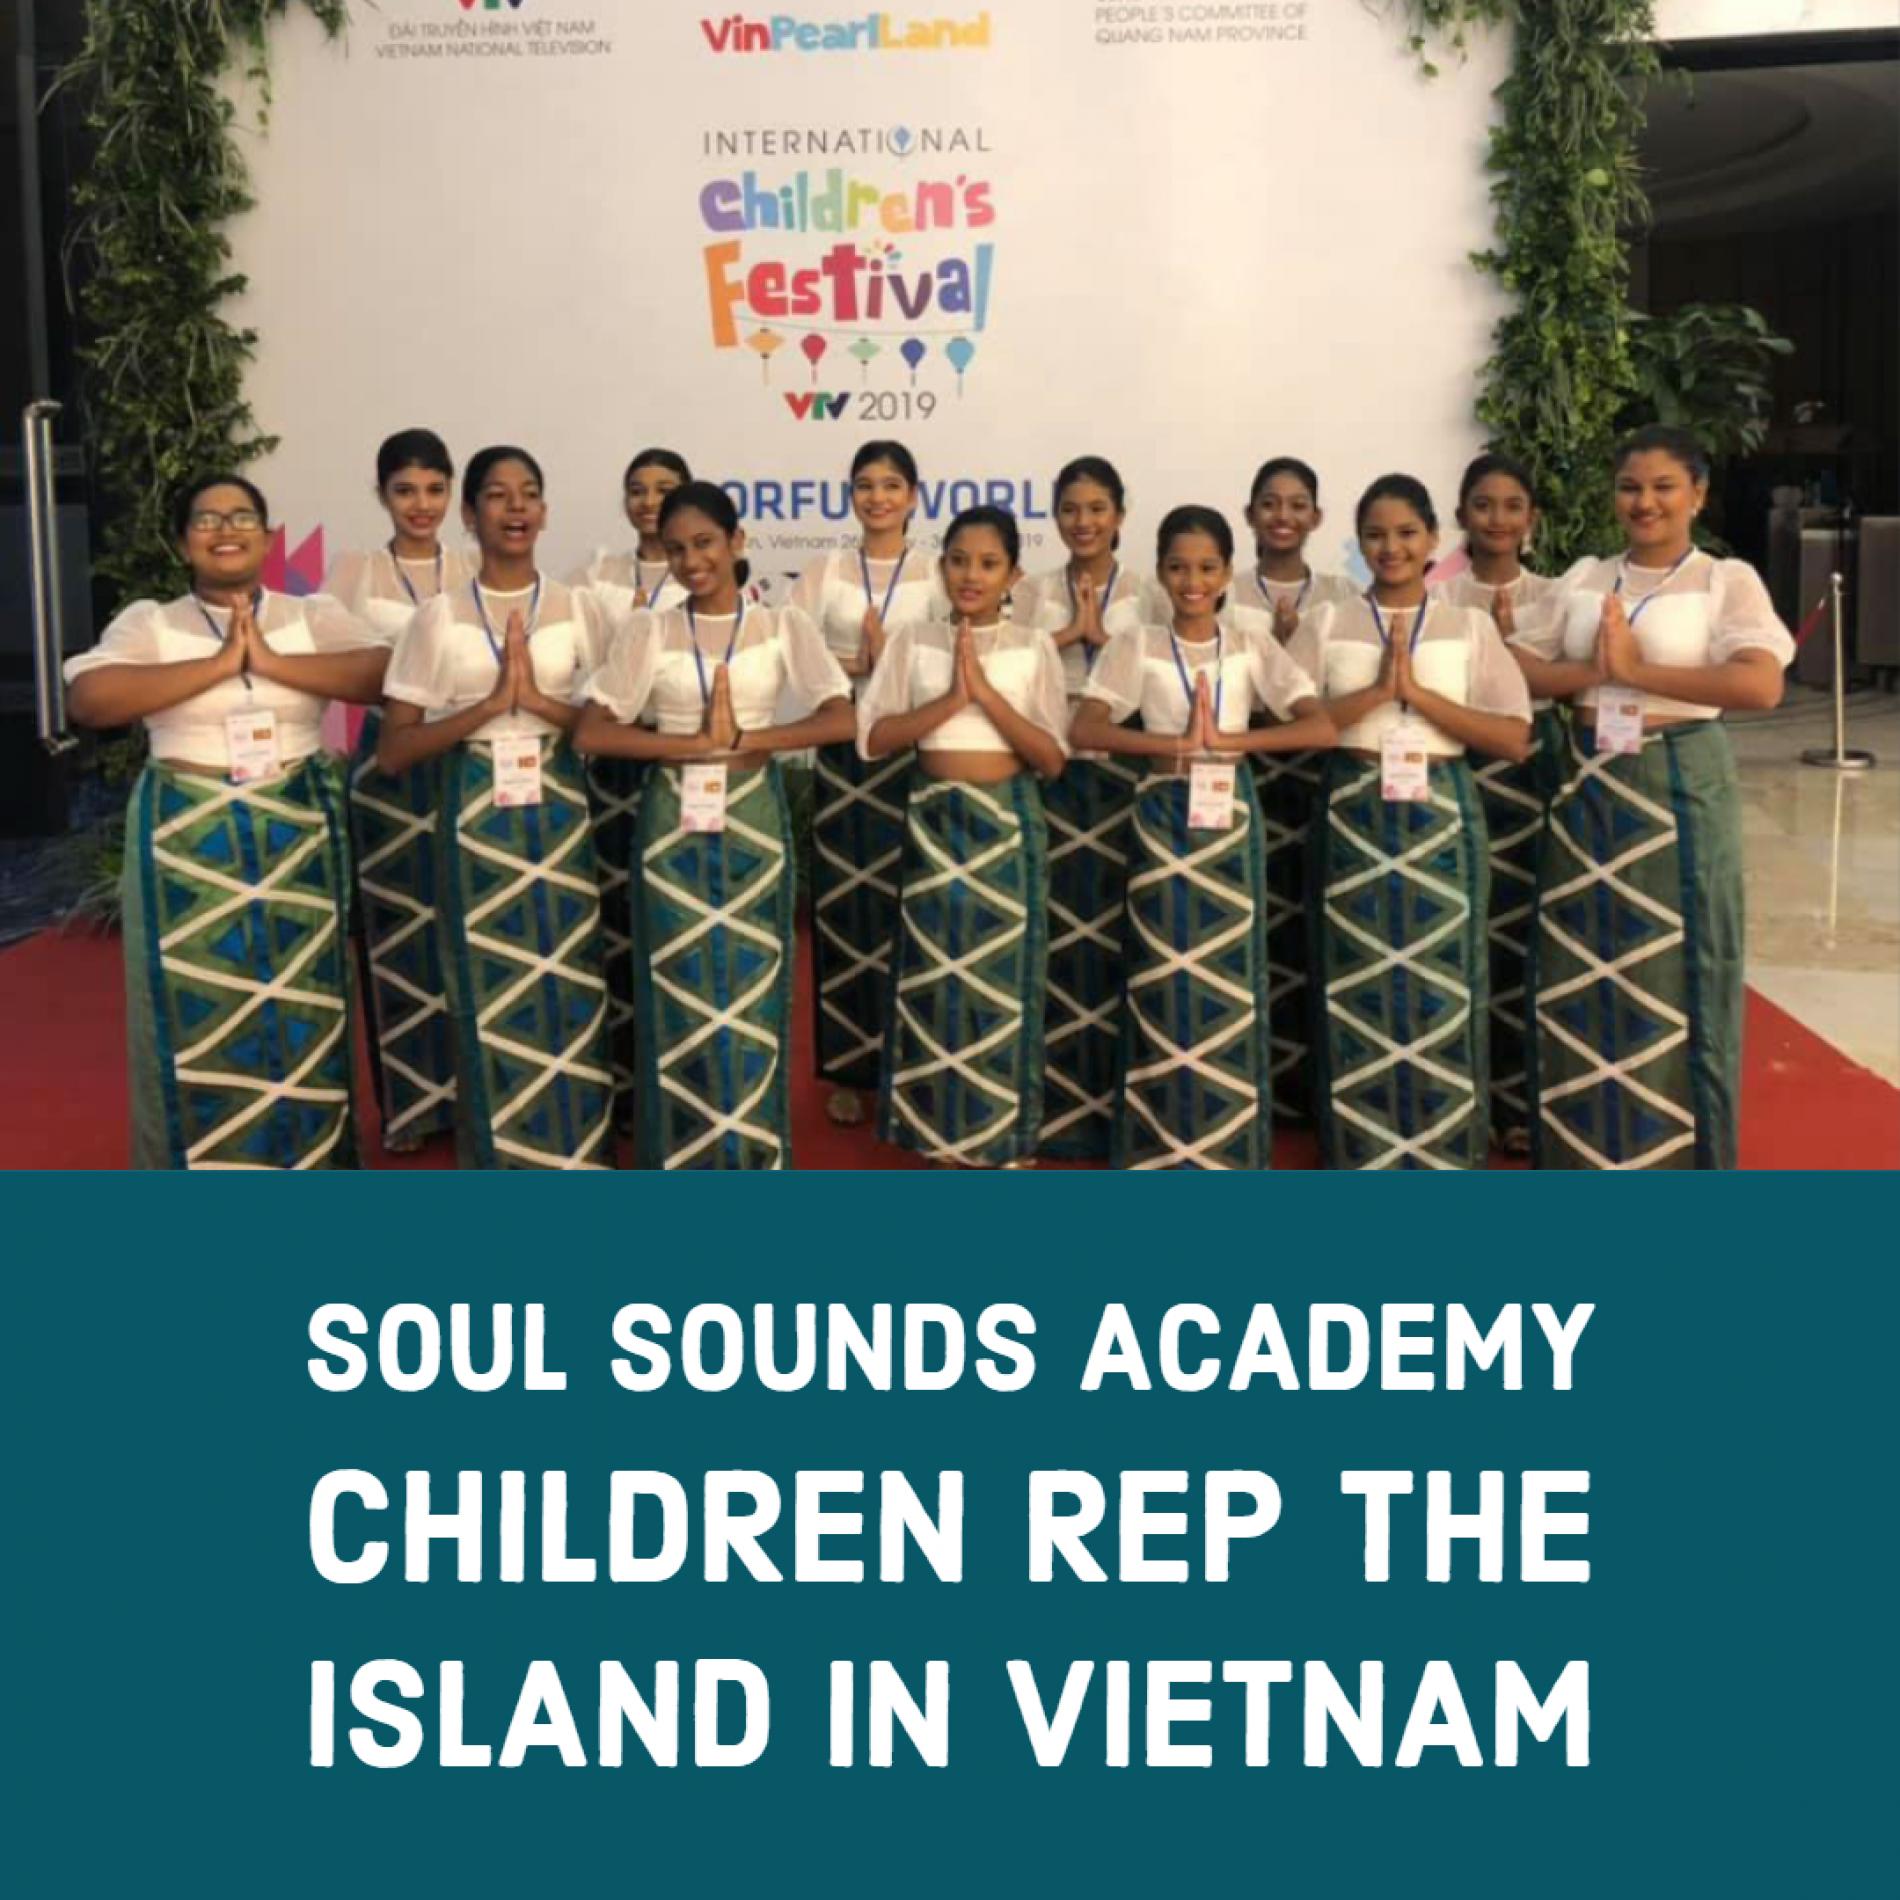 Soul Sounds Academy Children Rep The Island @ The International Children’s Festival In Vietnam